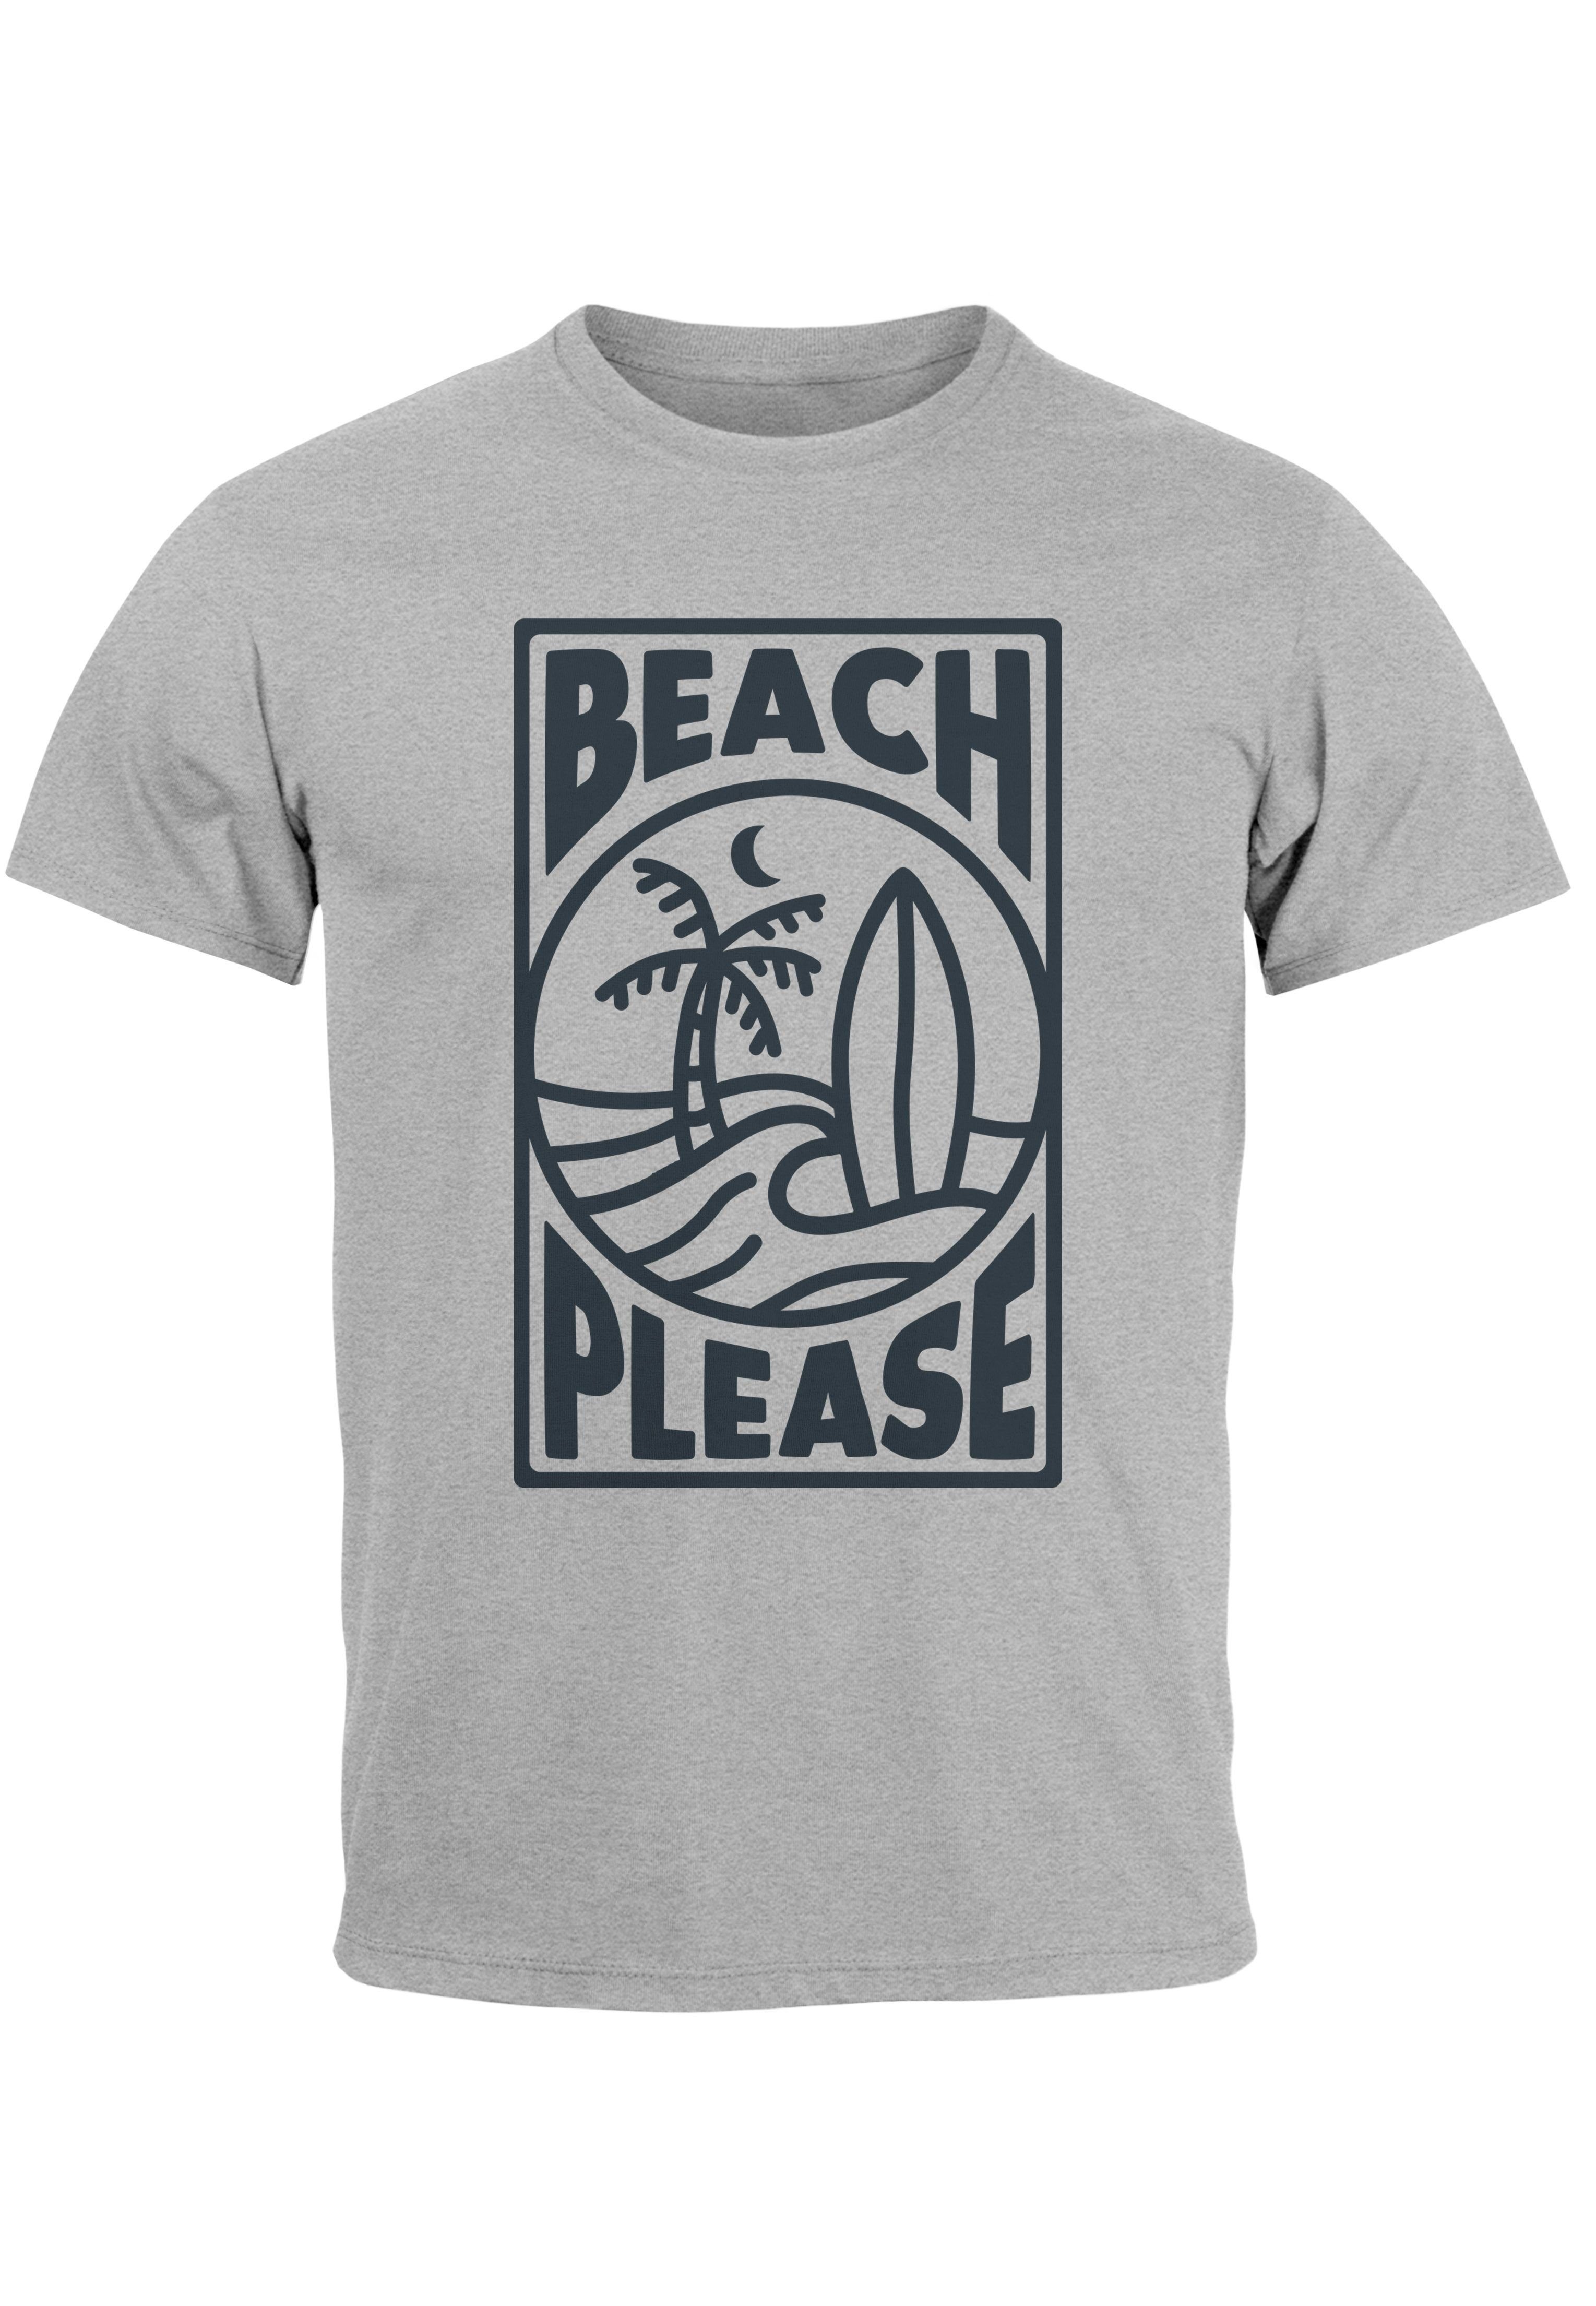 Print Sommer Surfing grau Print-Shirt Surfboard Beach Please Print T-Shirt Welle Neverless mit Wave Herren